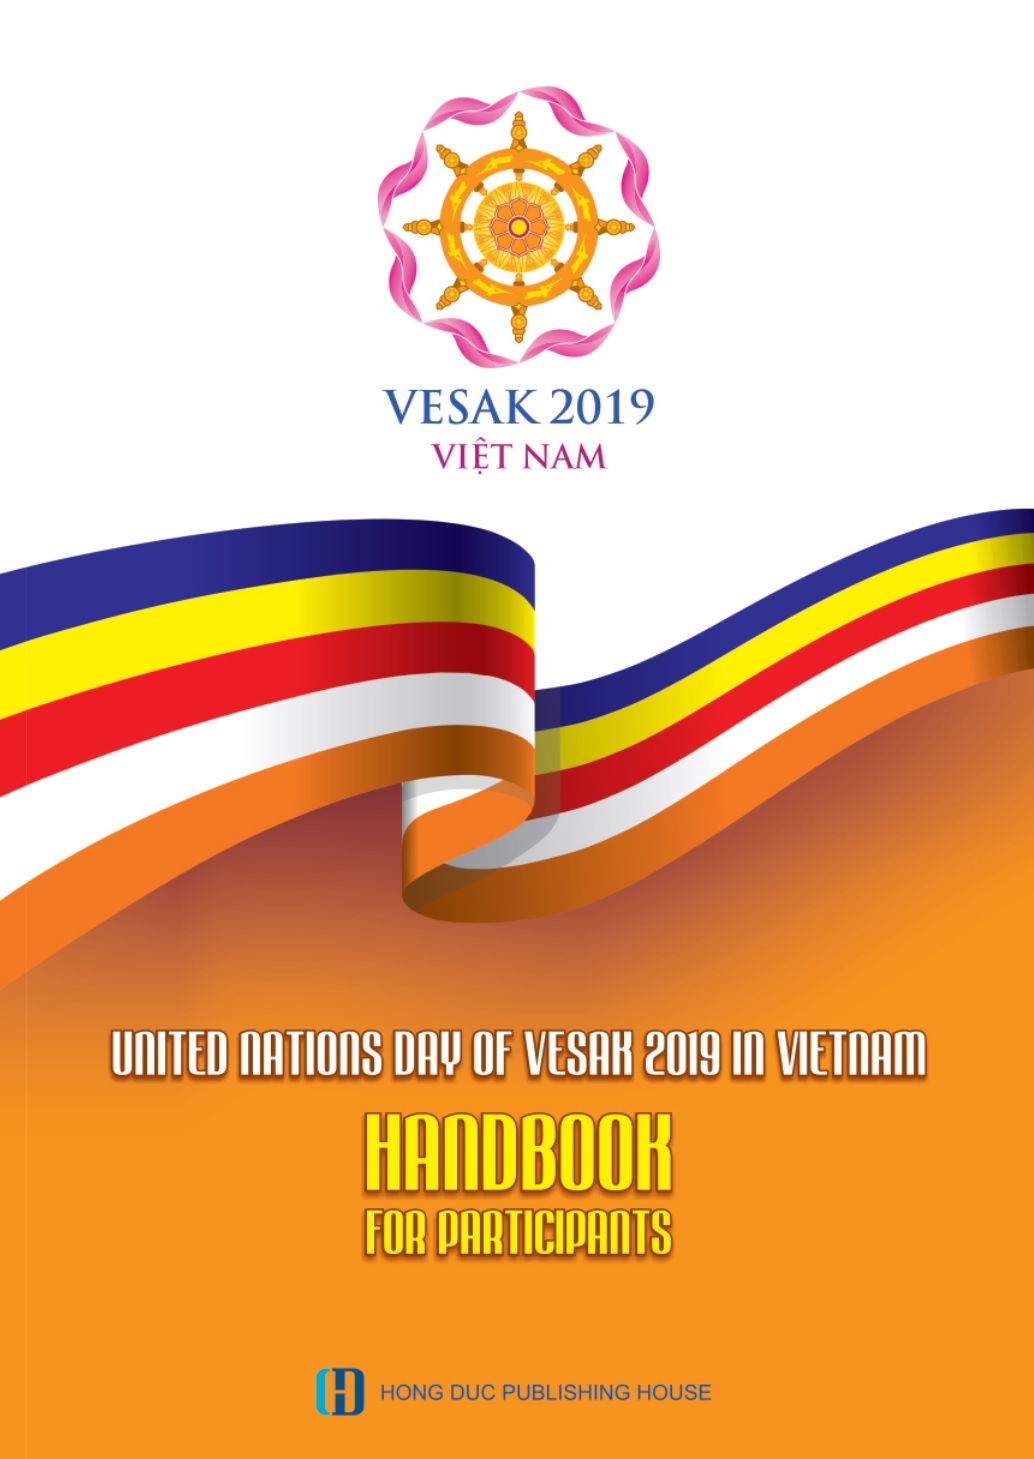 United Nations day of Vesak 2019 in Vietnam handbook for participants